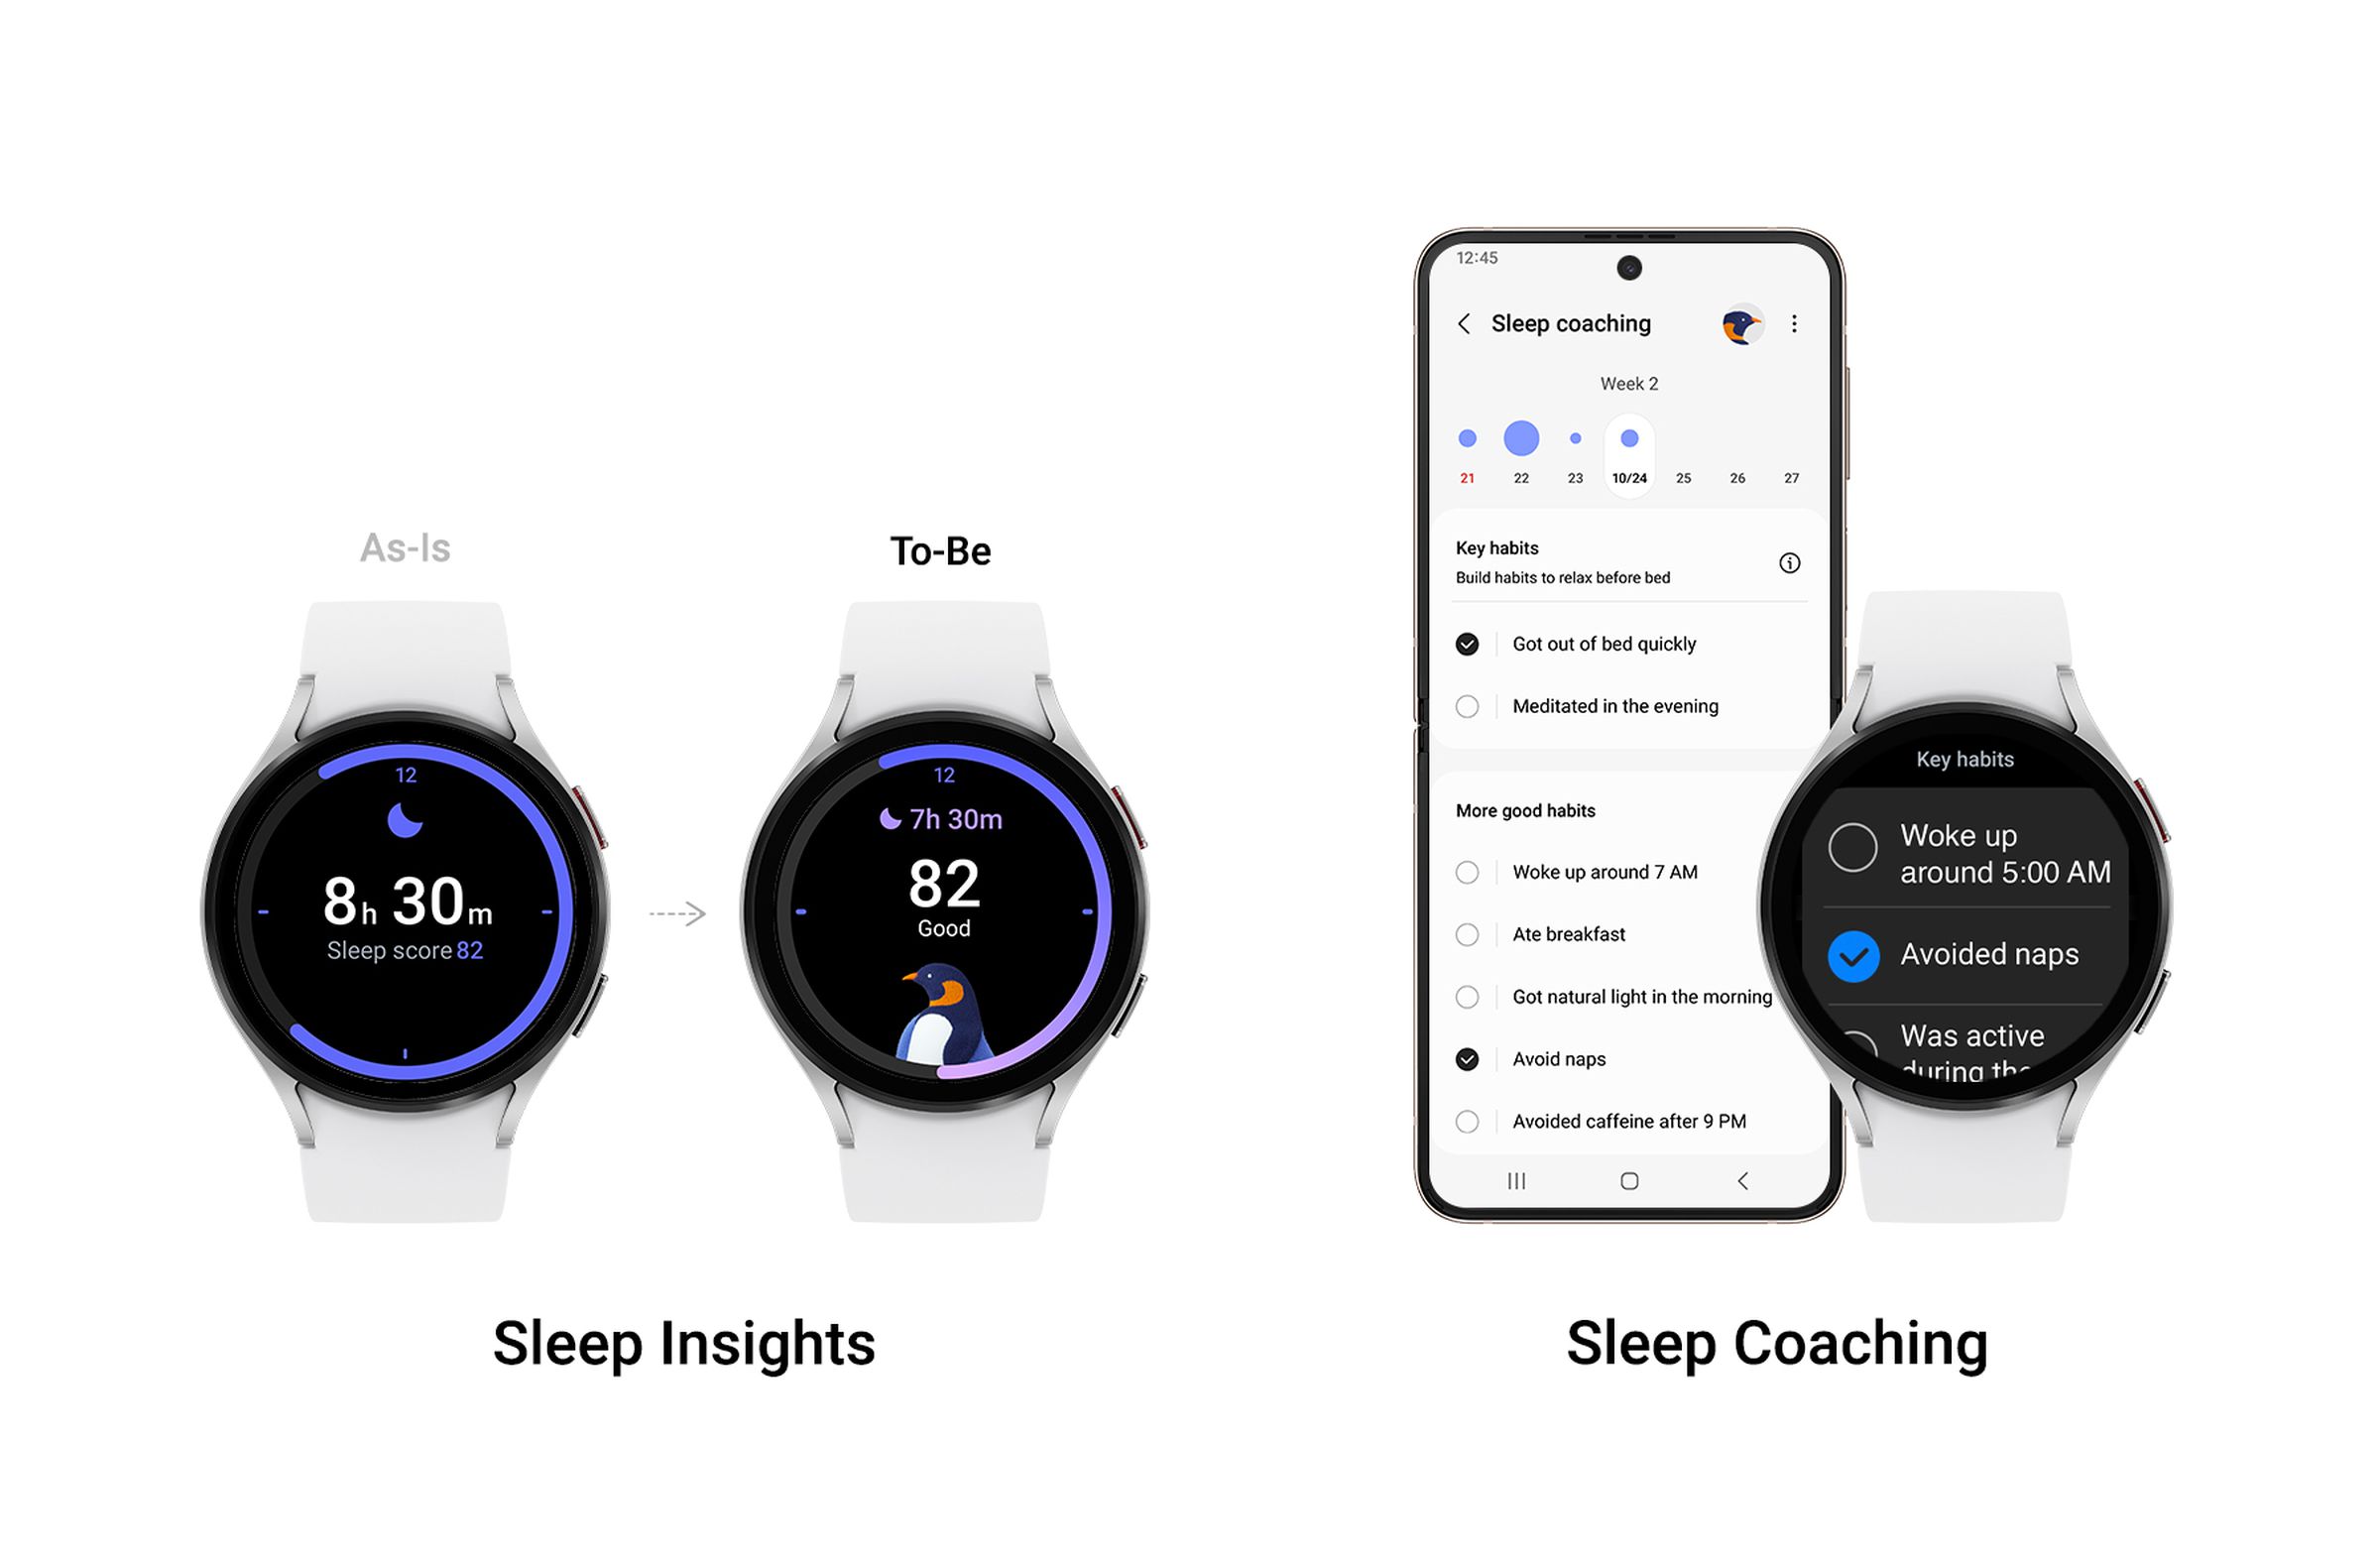 Renders of sleep updates on a Samsung Galaxy watch